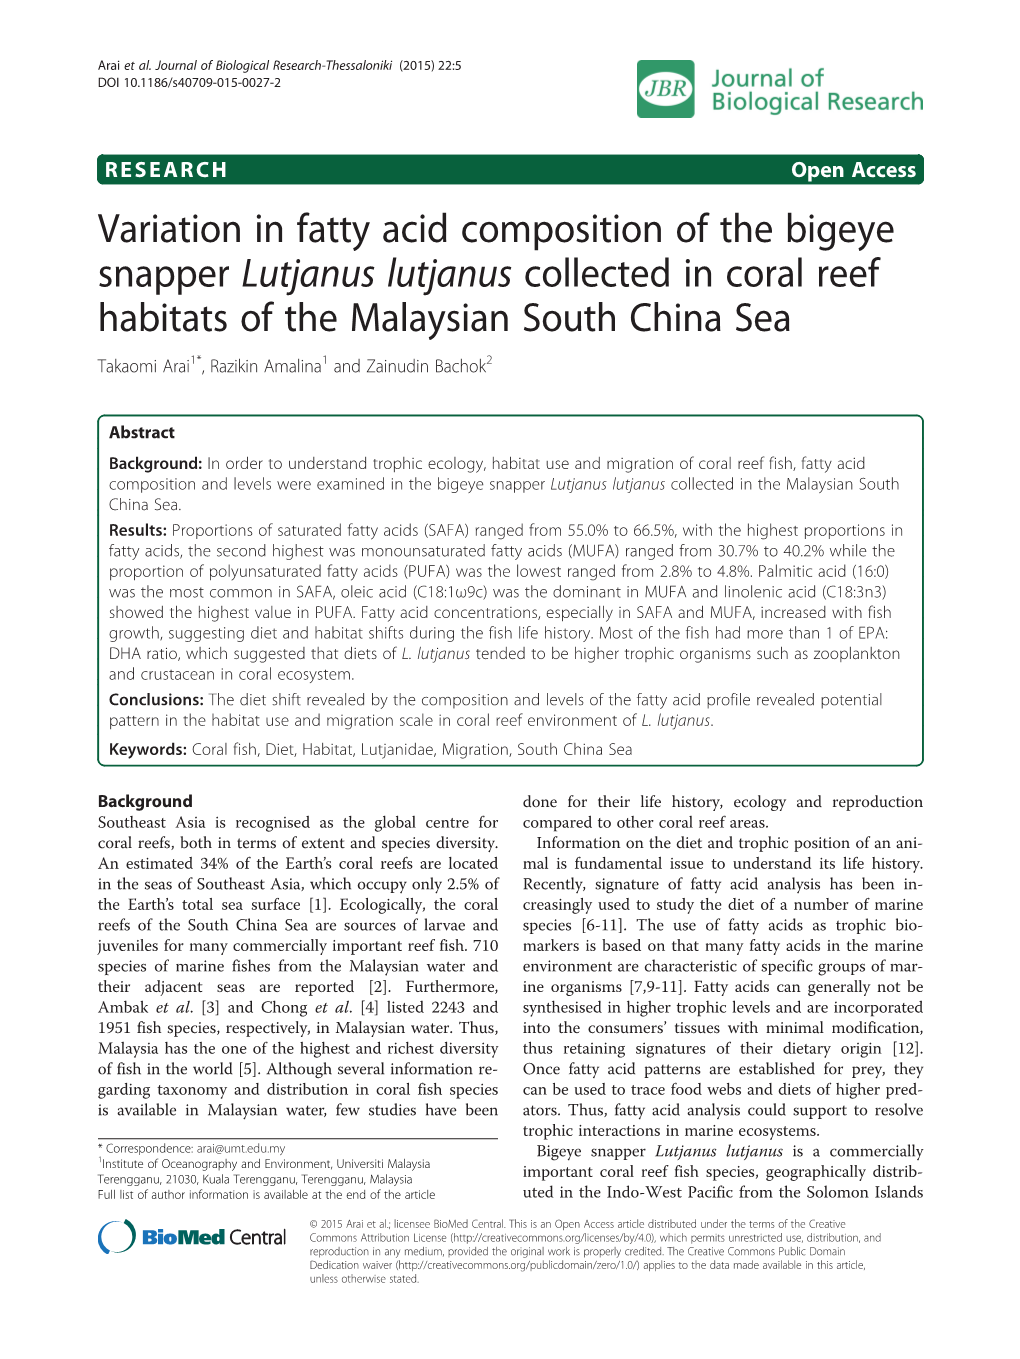 Variation in Fatty Acid Composition of the Bigeye Snapper Lutjanus